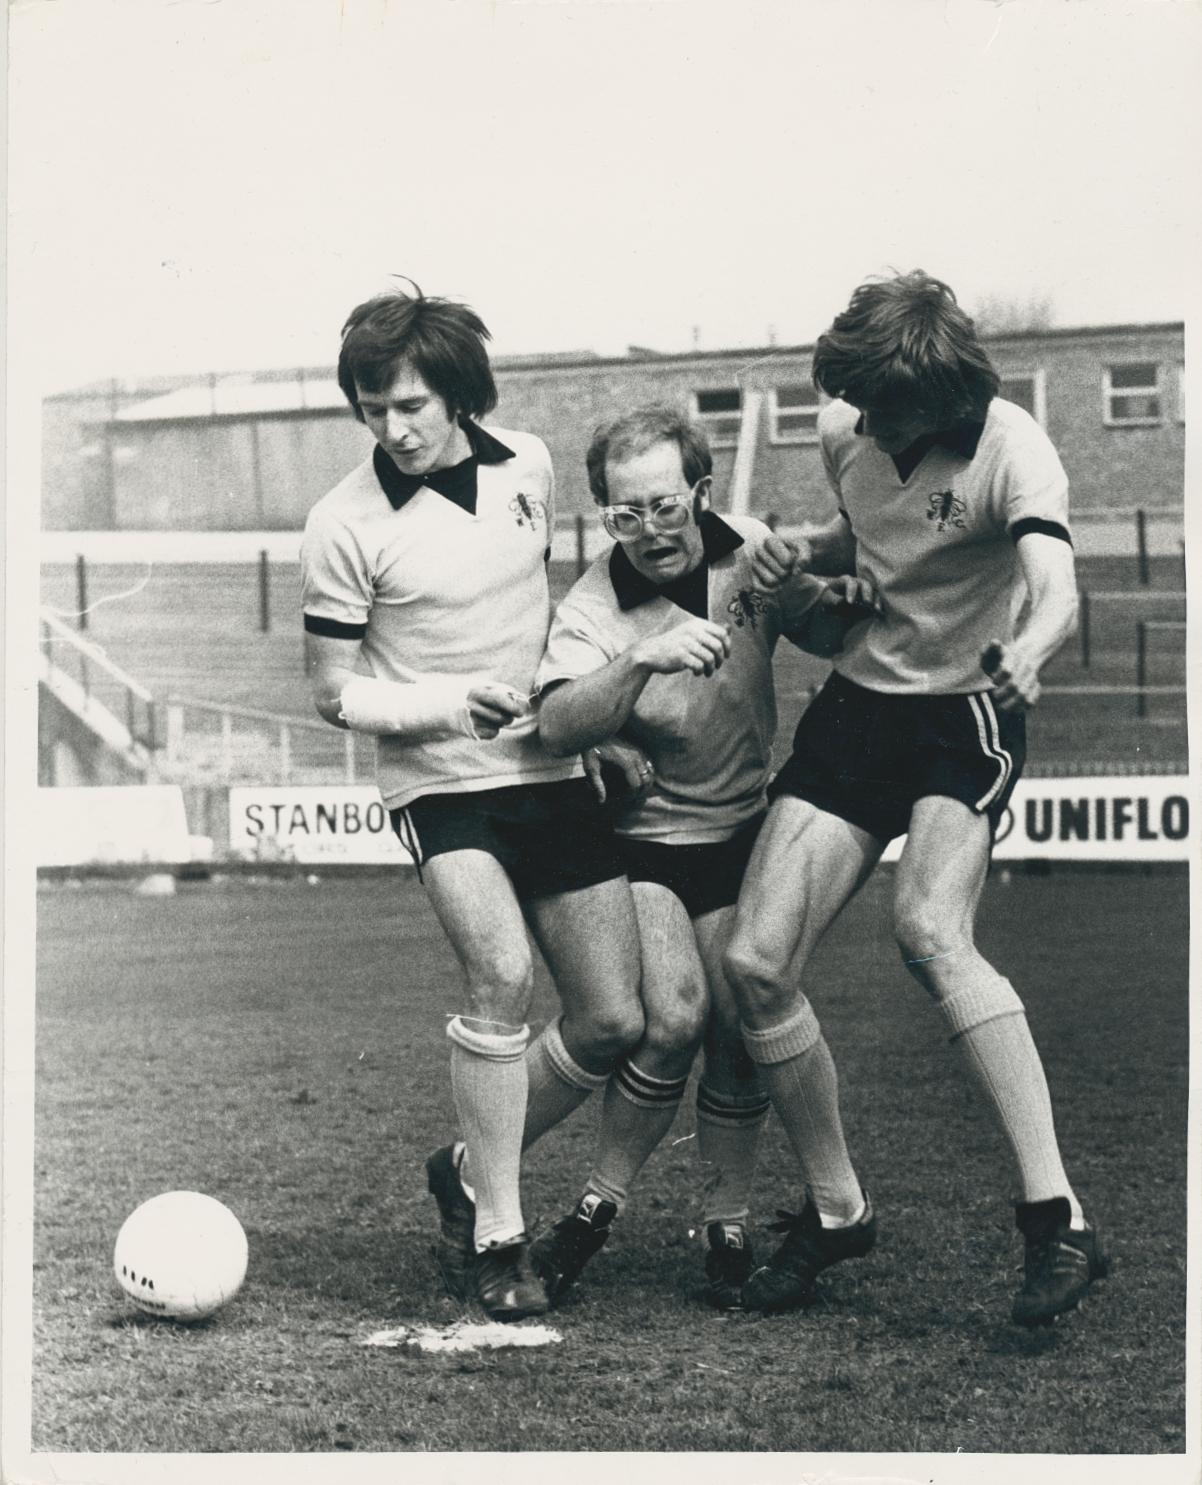 Tim Graham Black and White Photograph - Elton John in a soccer match, Watford FC Shirts, 1973